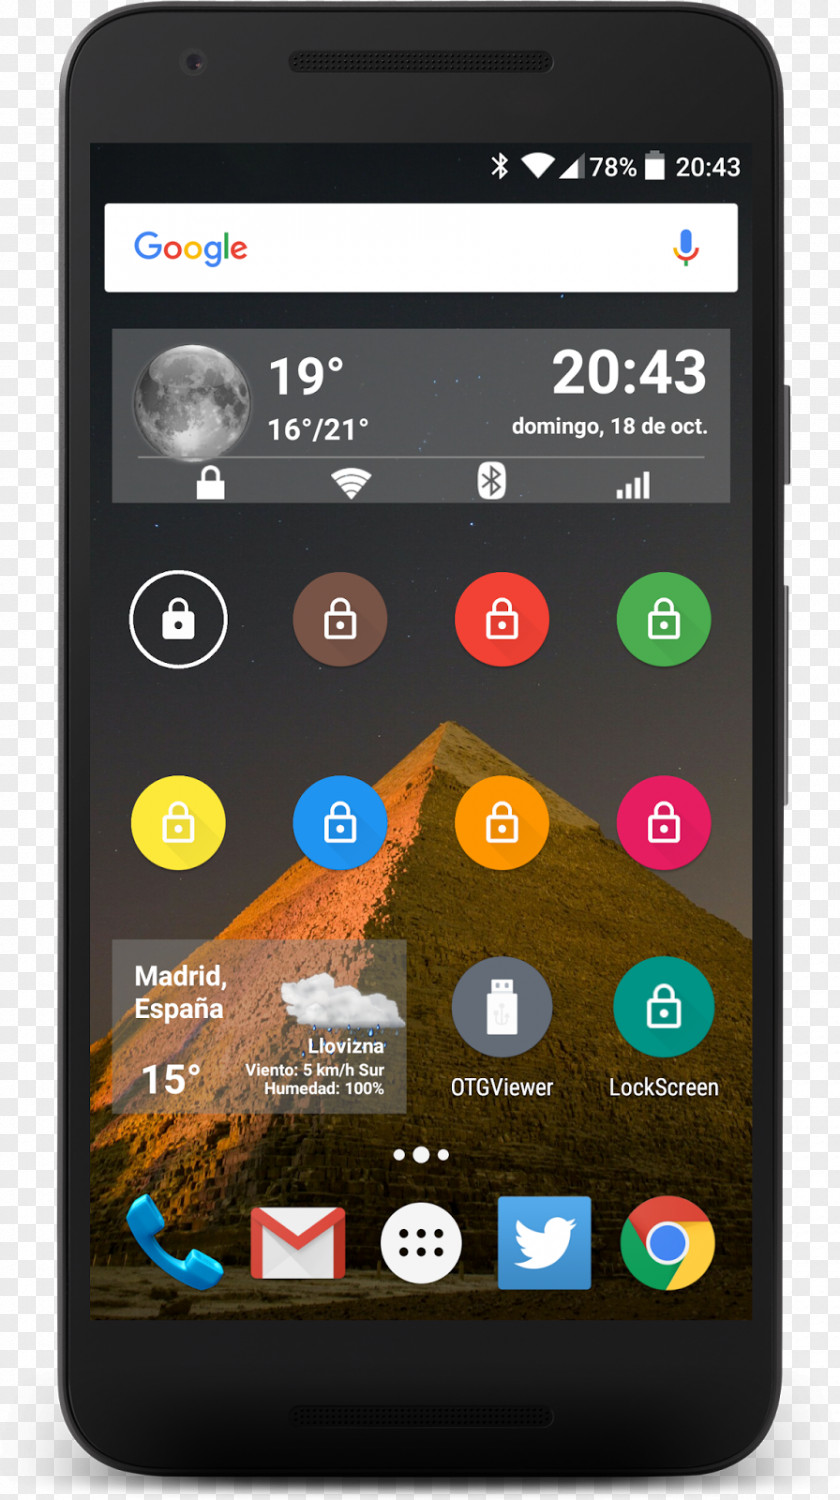 App Design Material OnePlus One HTC X Moto G4 Dual 16GB 4G LTE Black (E1003) Unlocked PNG